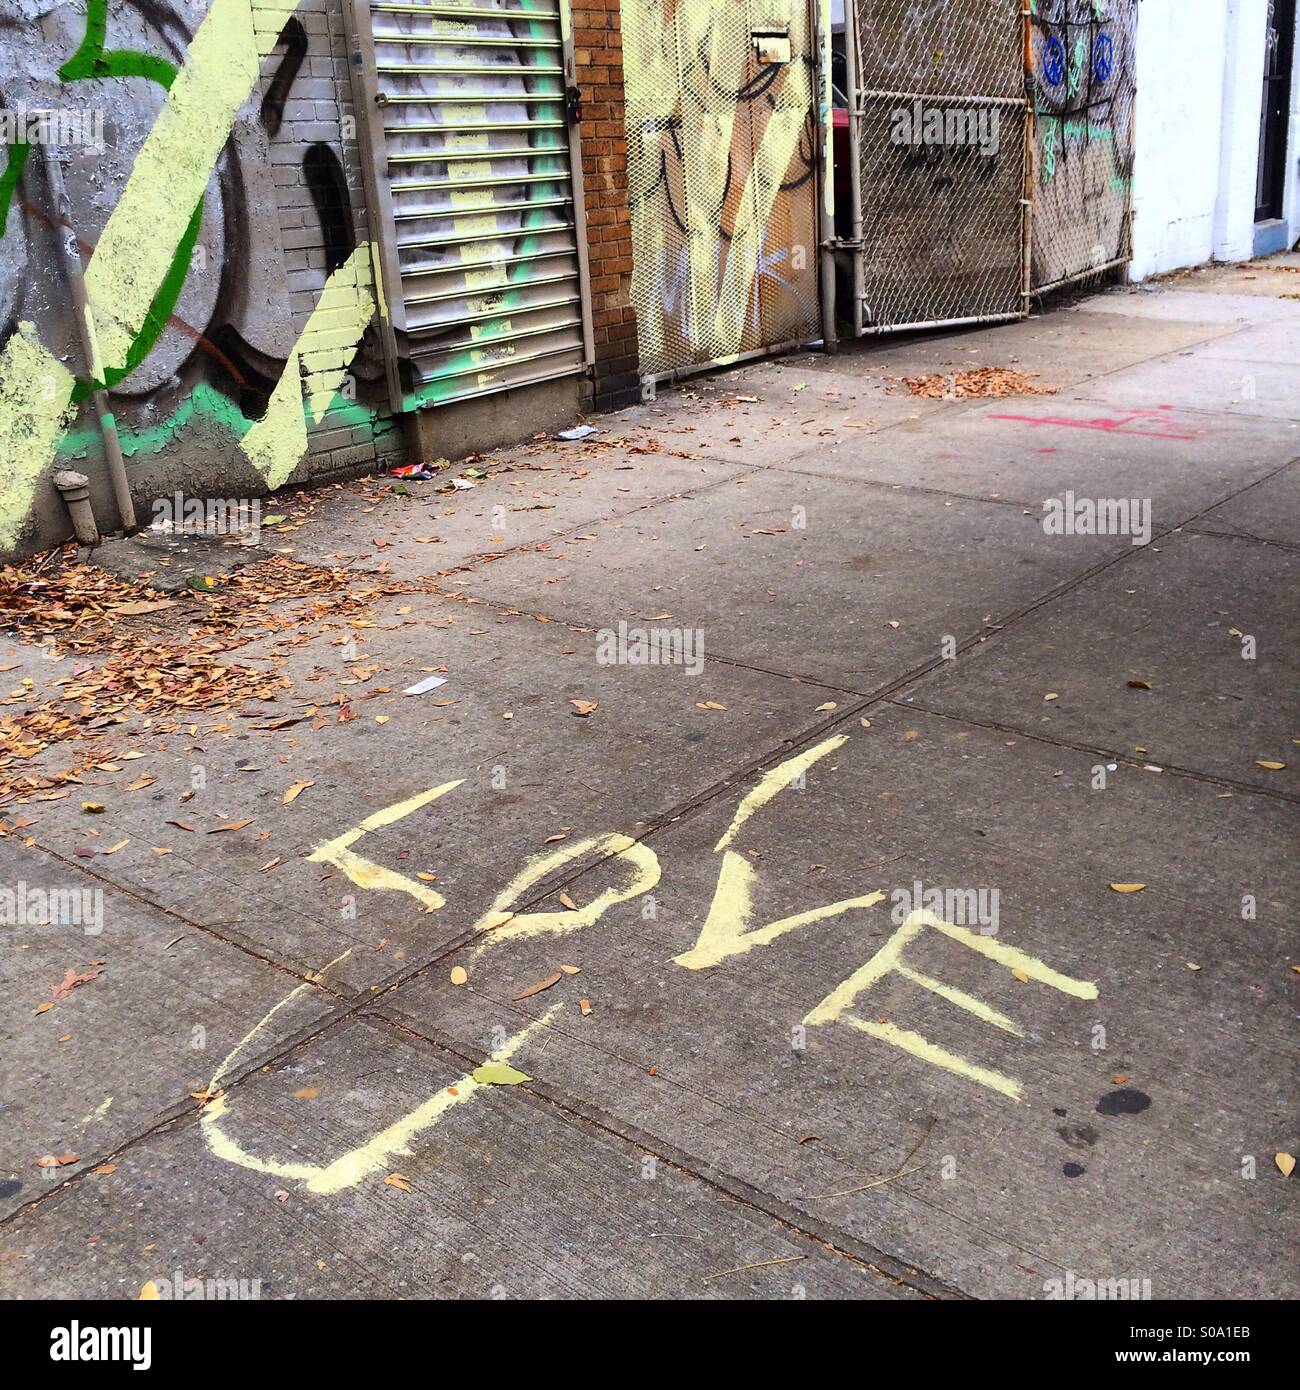 I Love You, graffiti on the Sidewalk Stock Photo